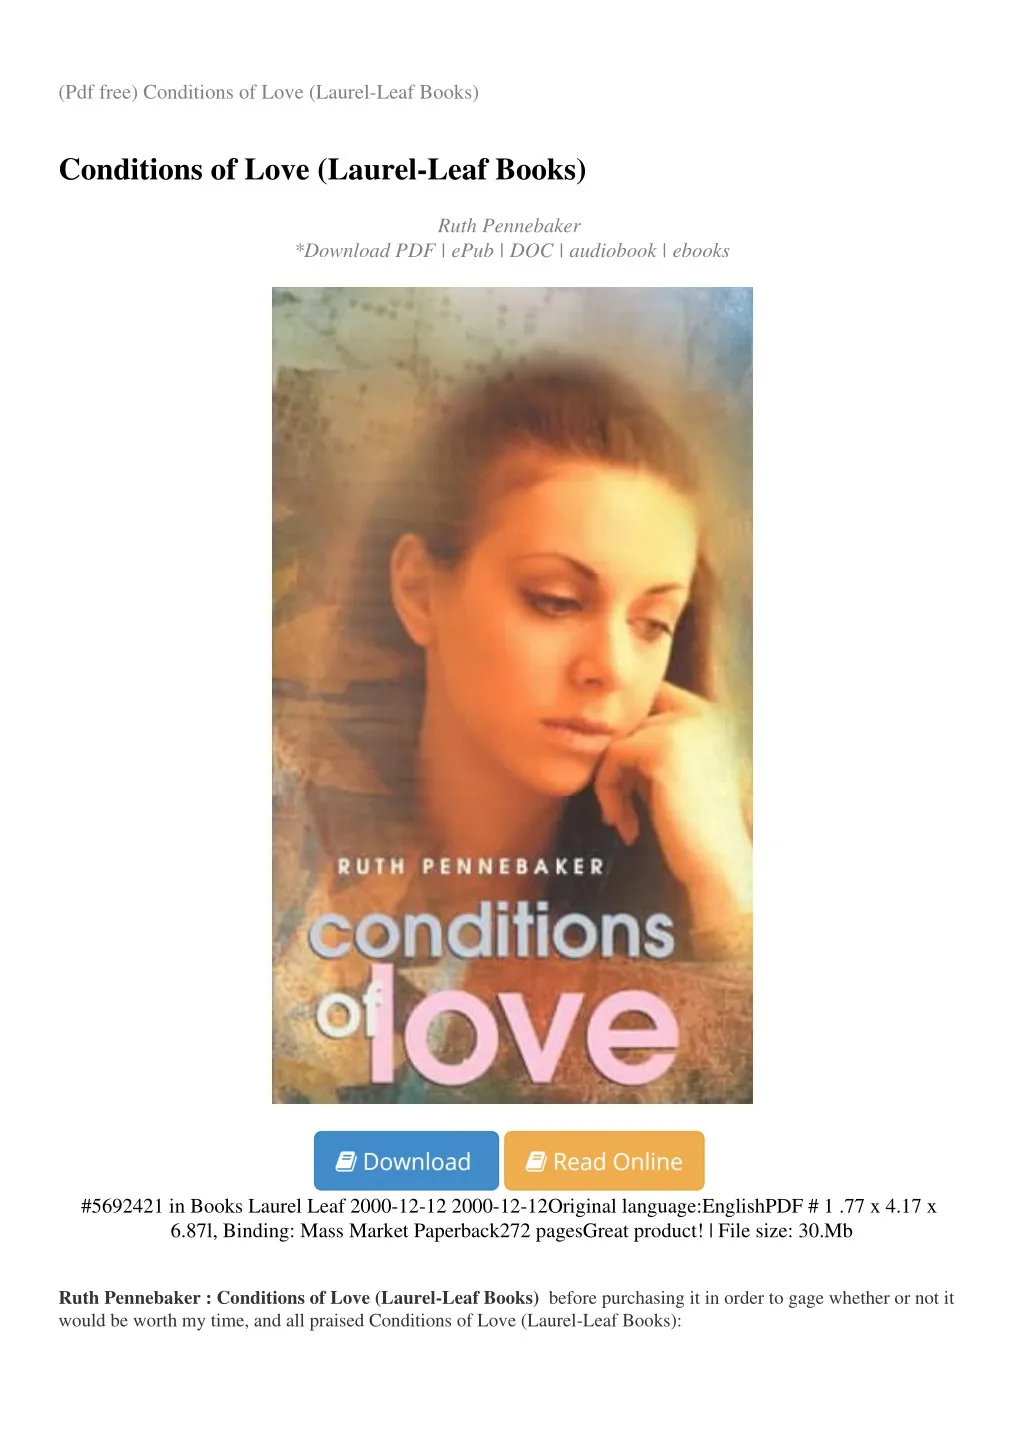 pdf free conditions of love laurel leaf books